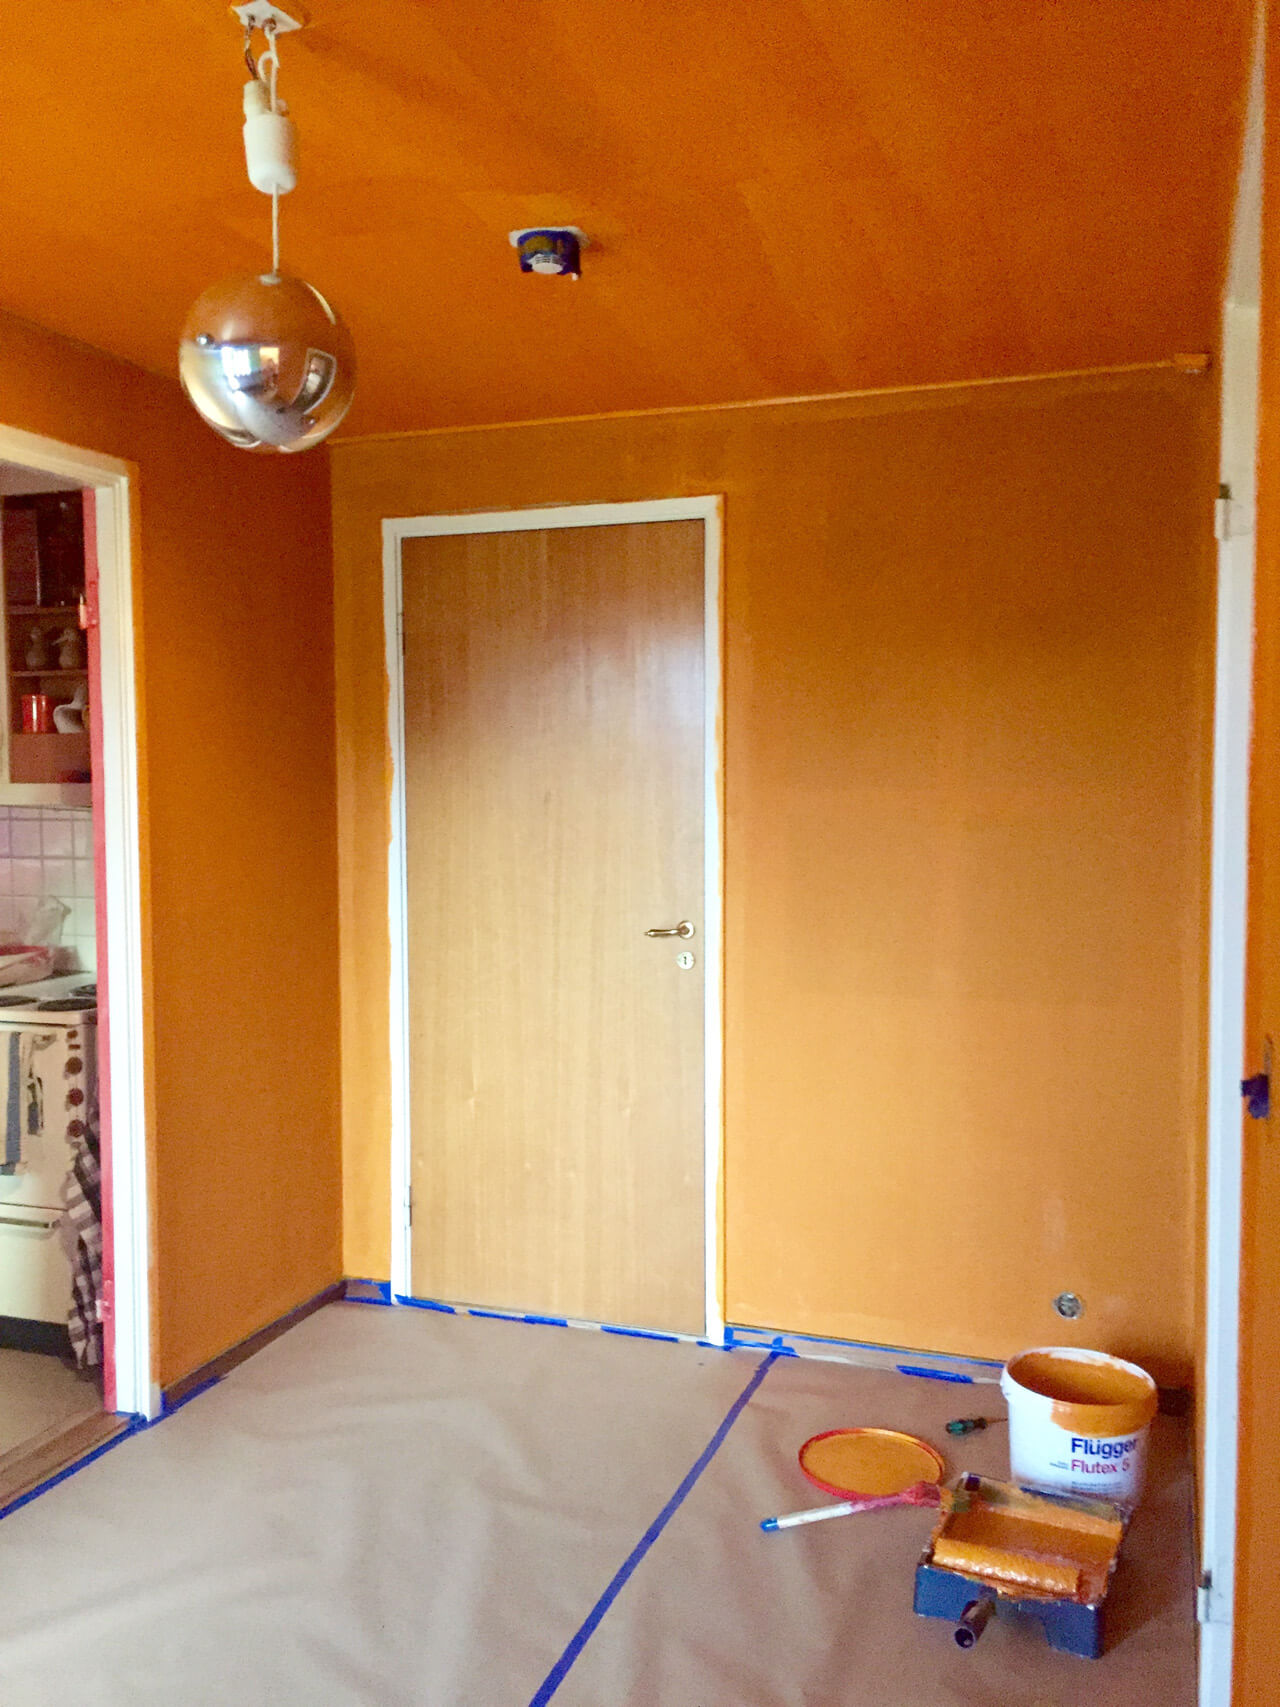 orange-room